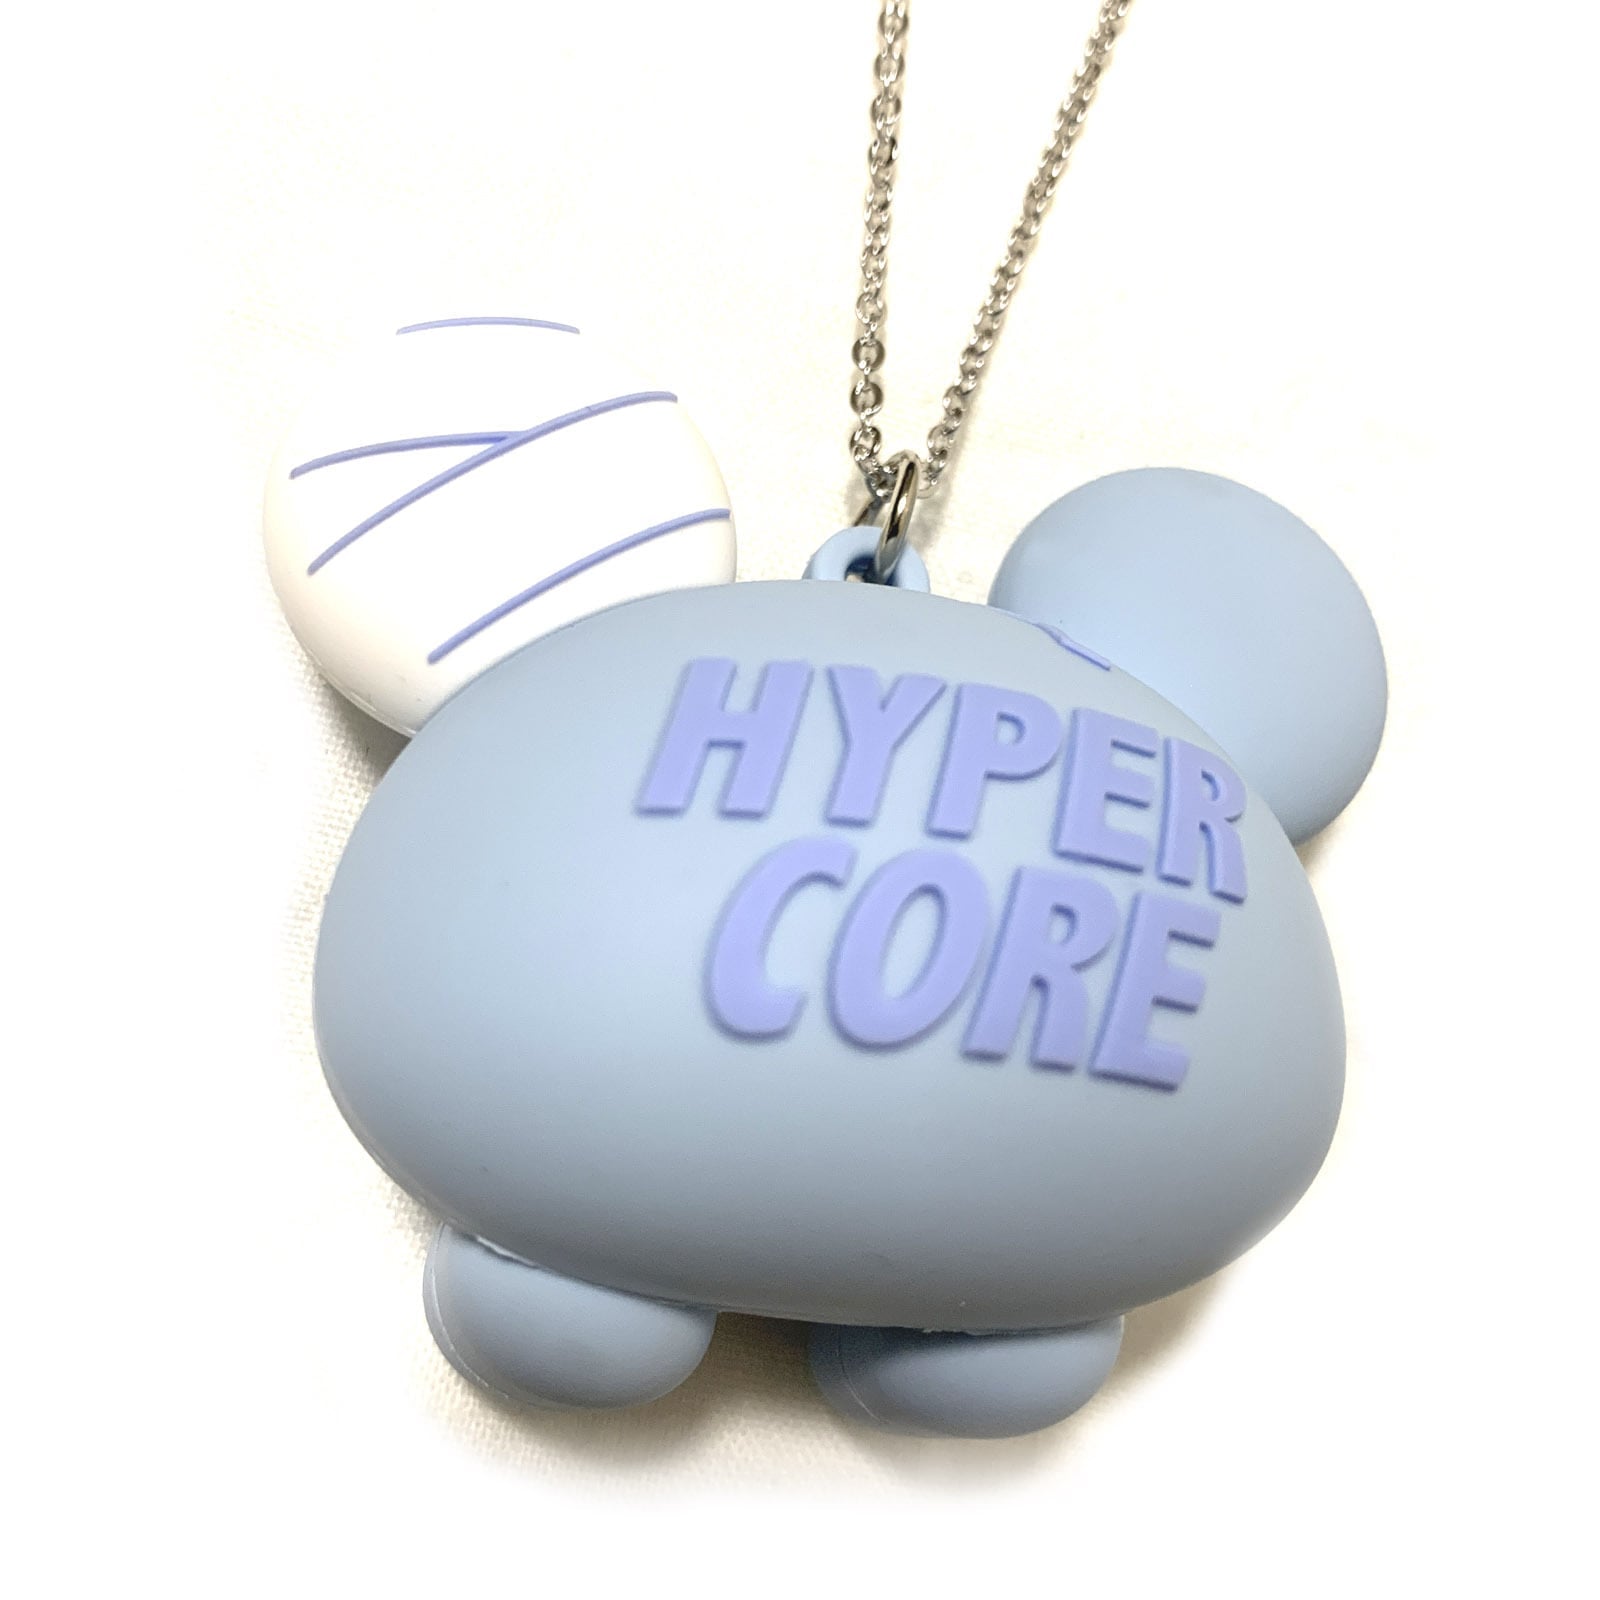 Hypercore "Pien" bear necklace